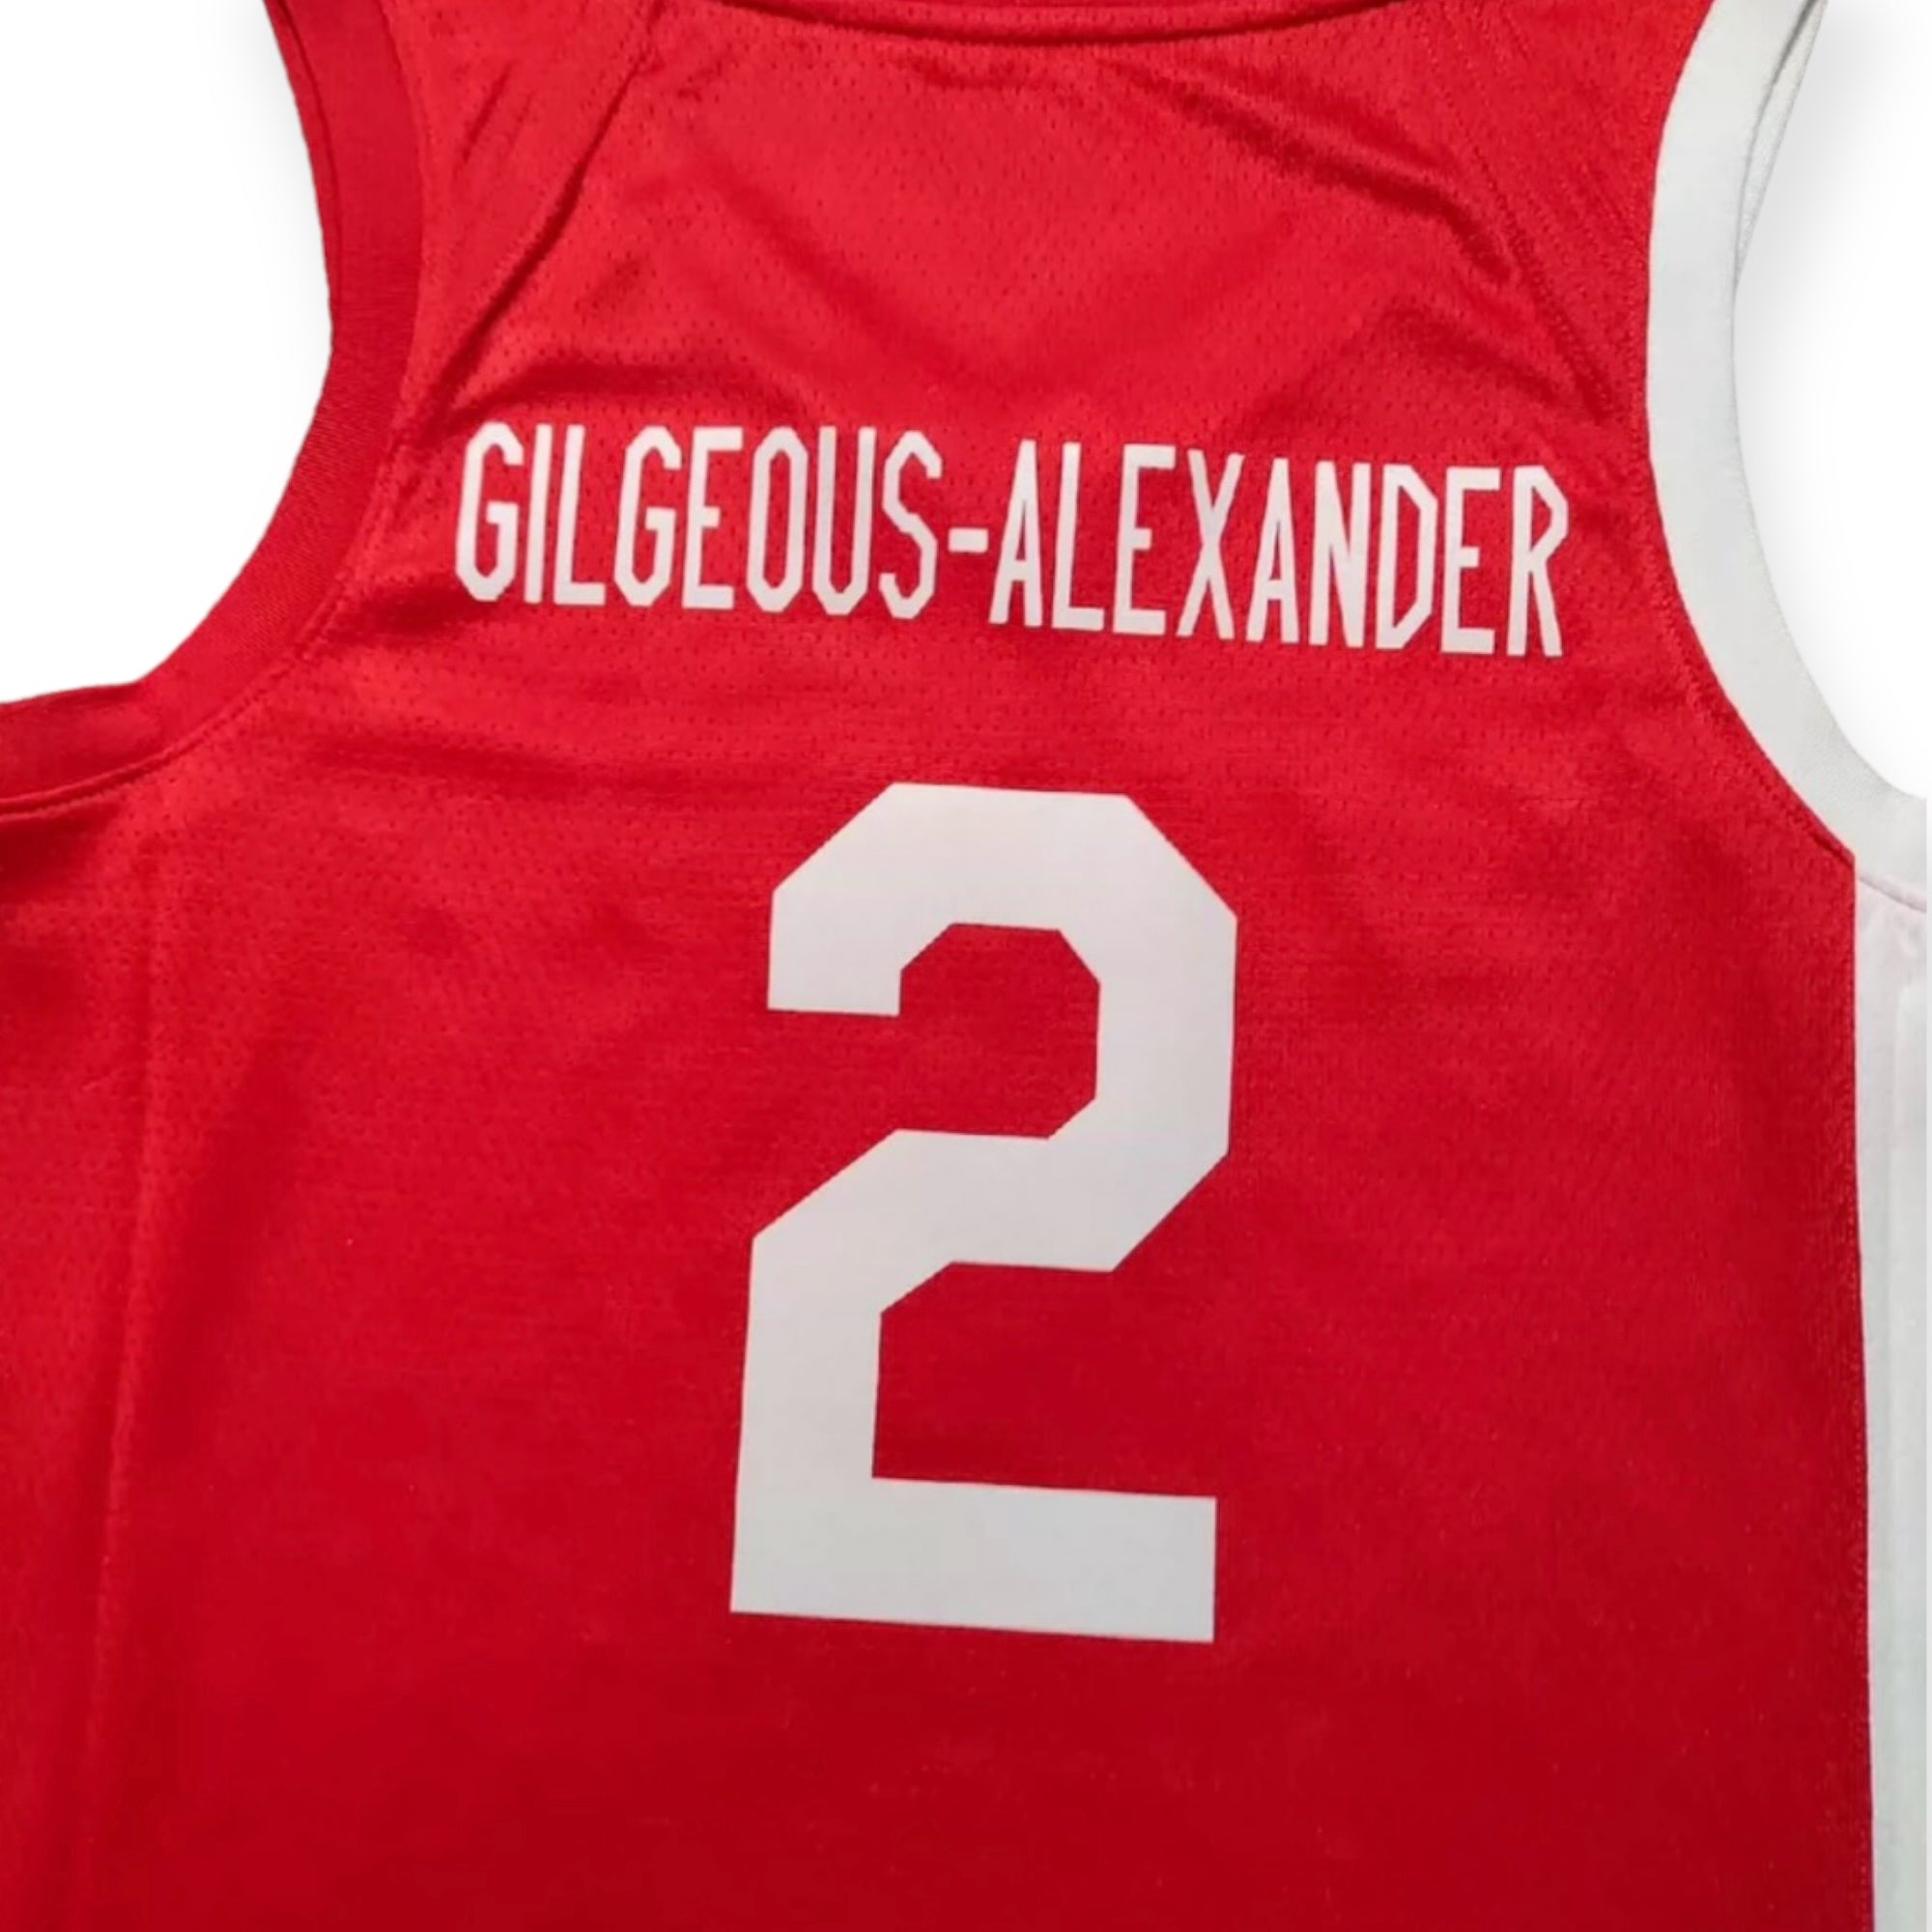 Nike Shai Gilgeous-Alexander Canada National Team Red Swingman Jersey